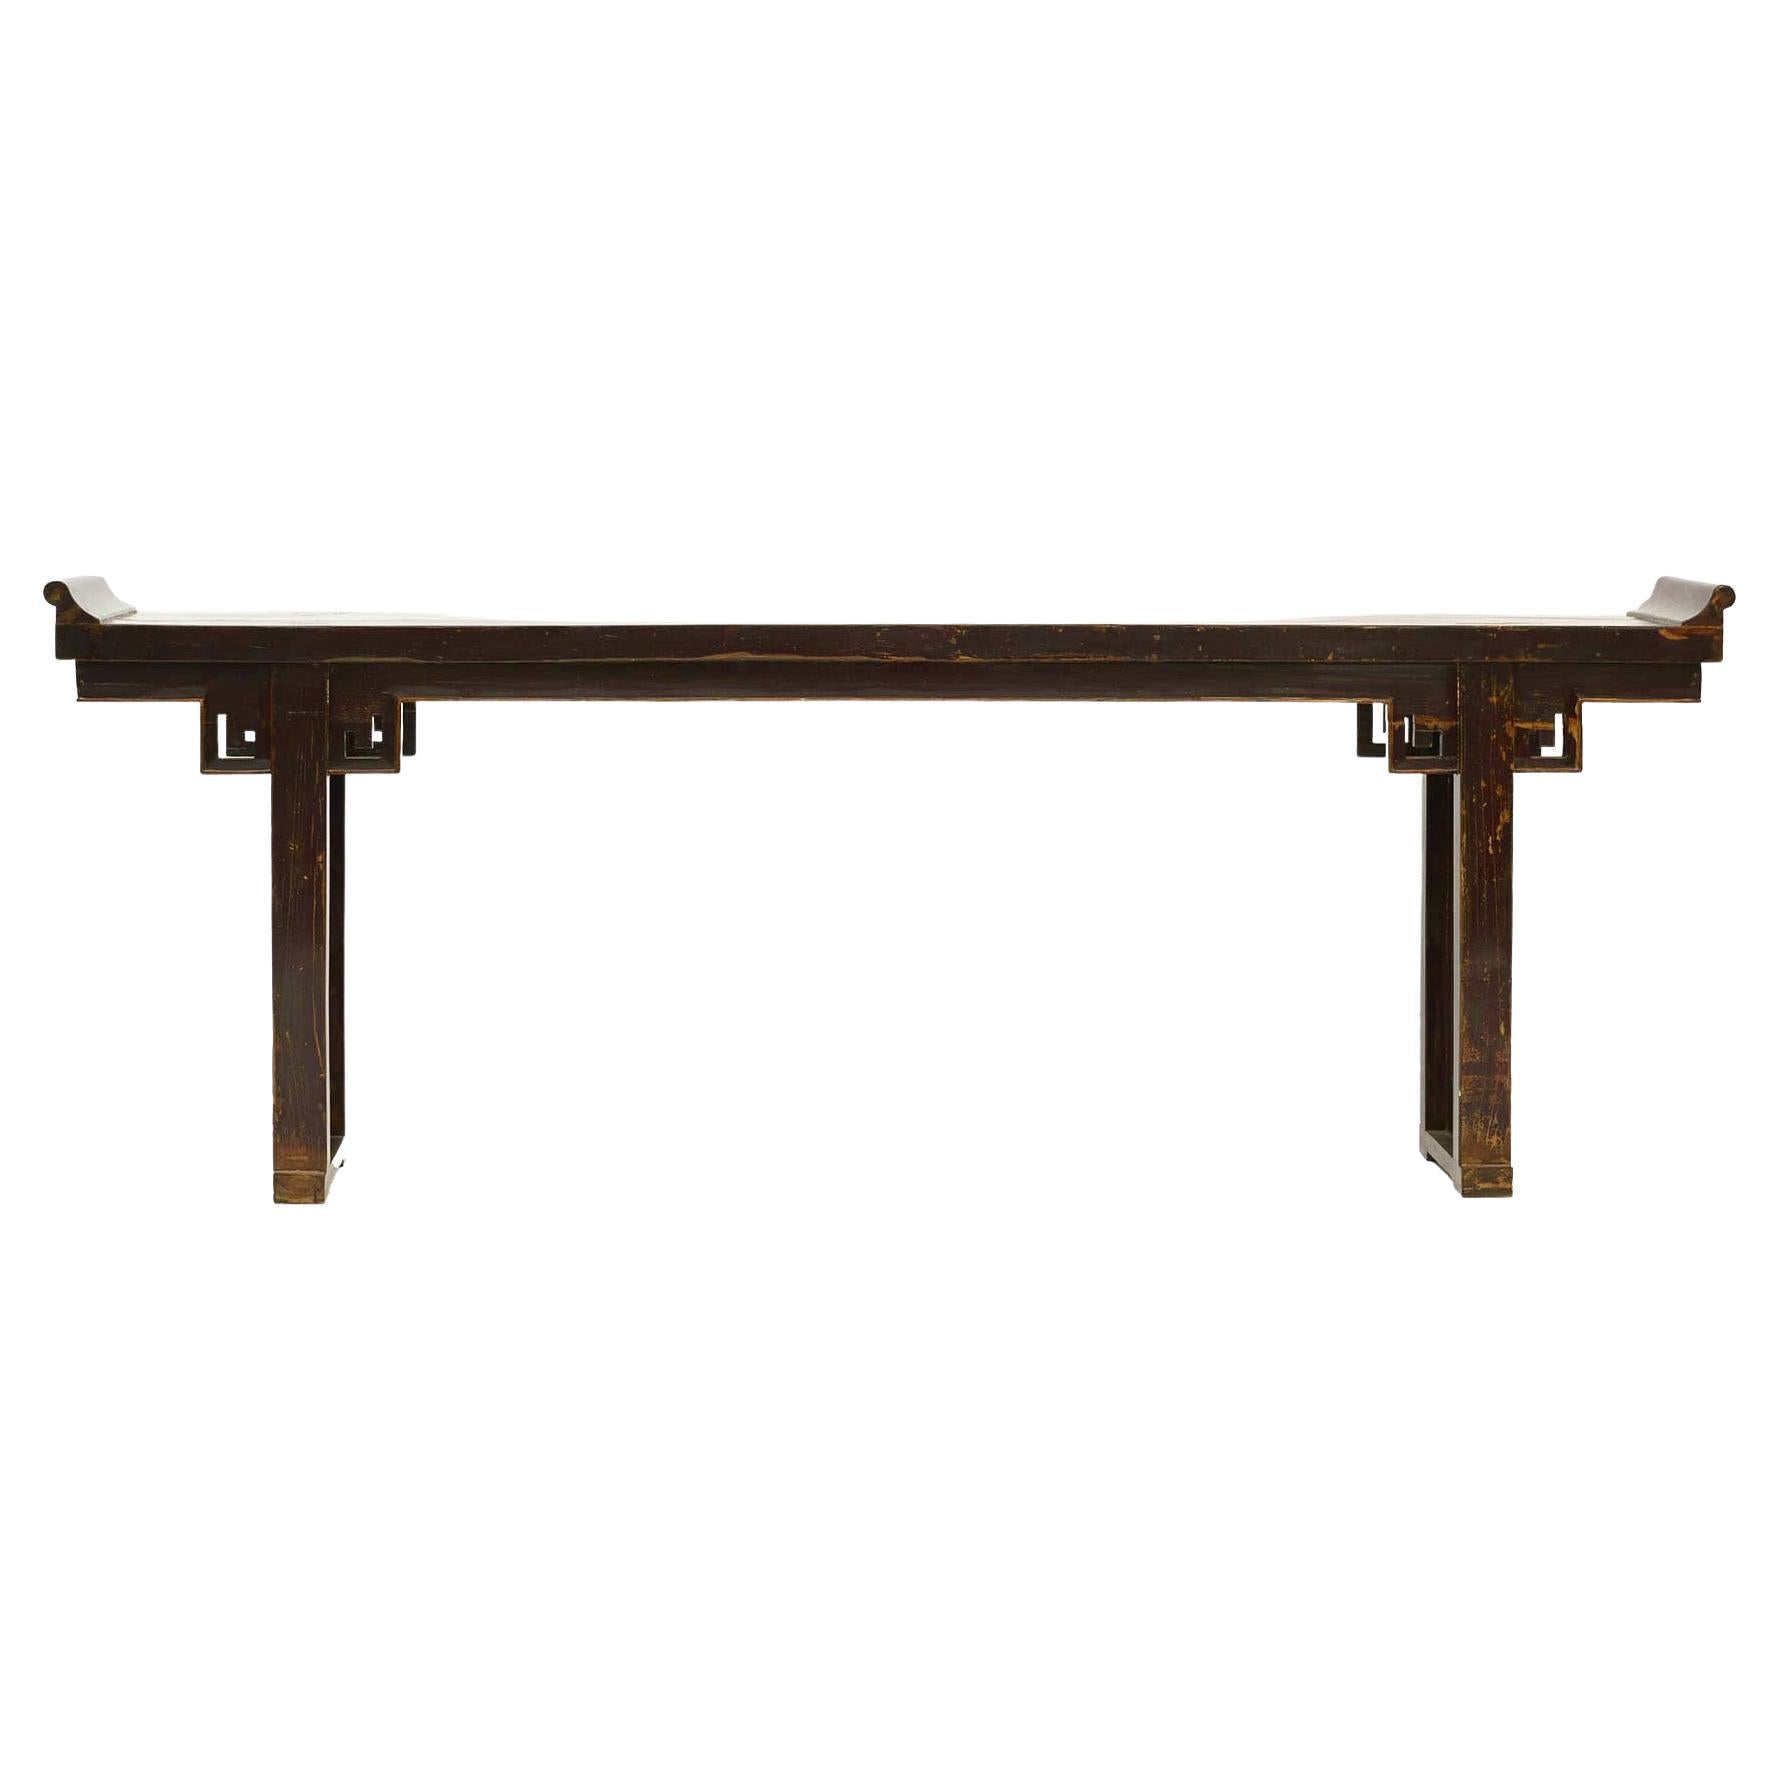 Antique Architectural / Alter Console Table, c 1800